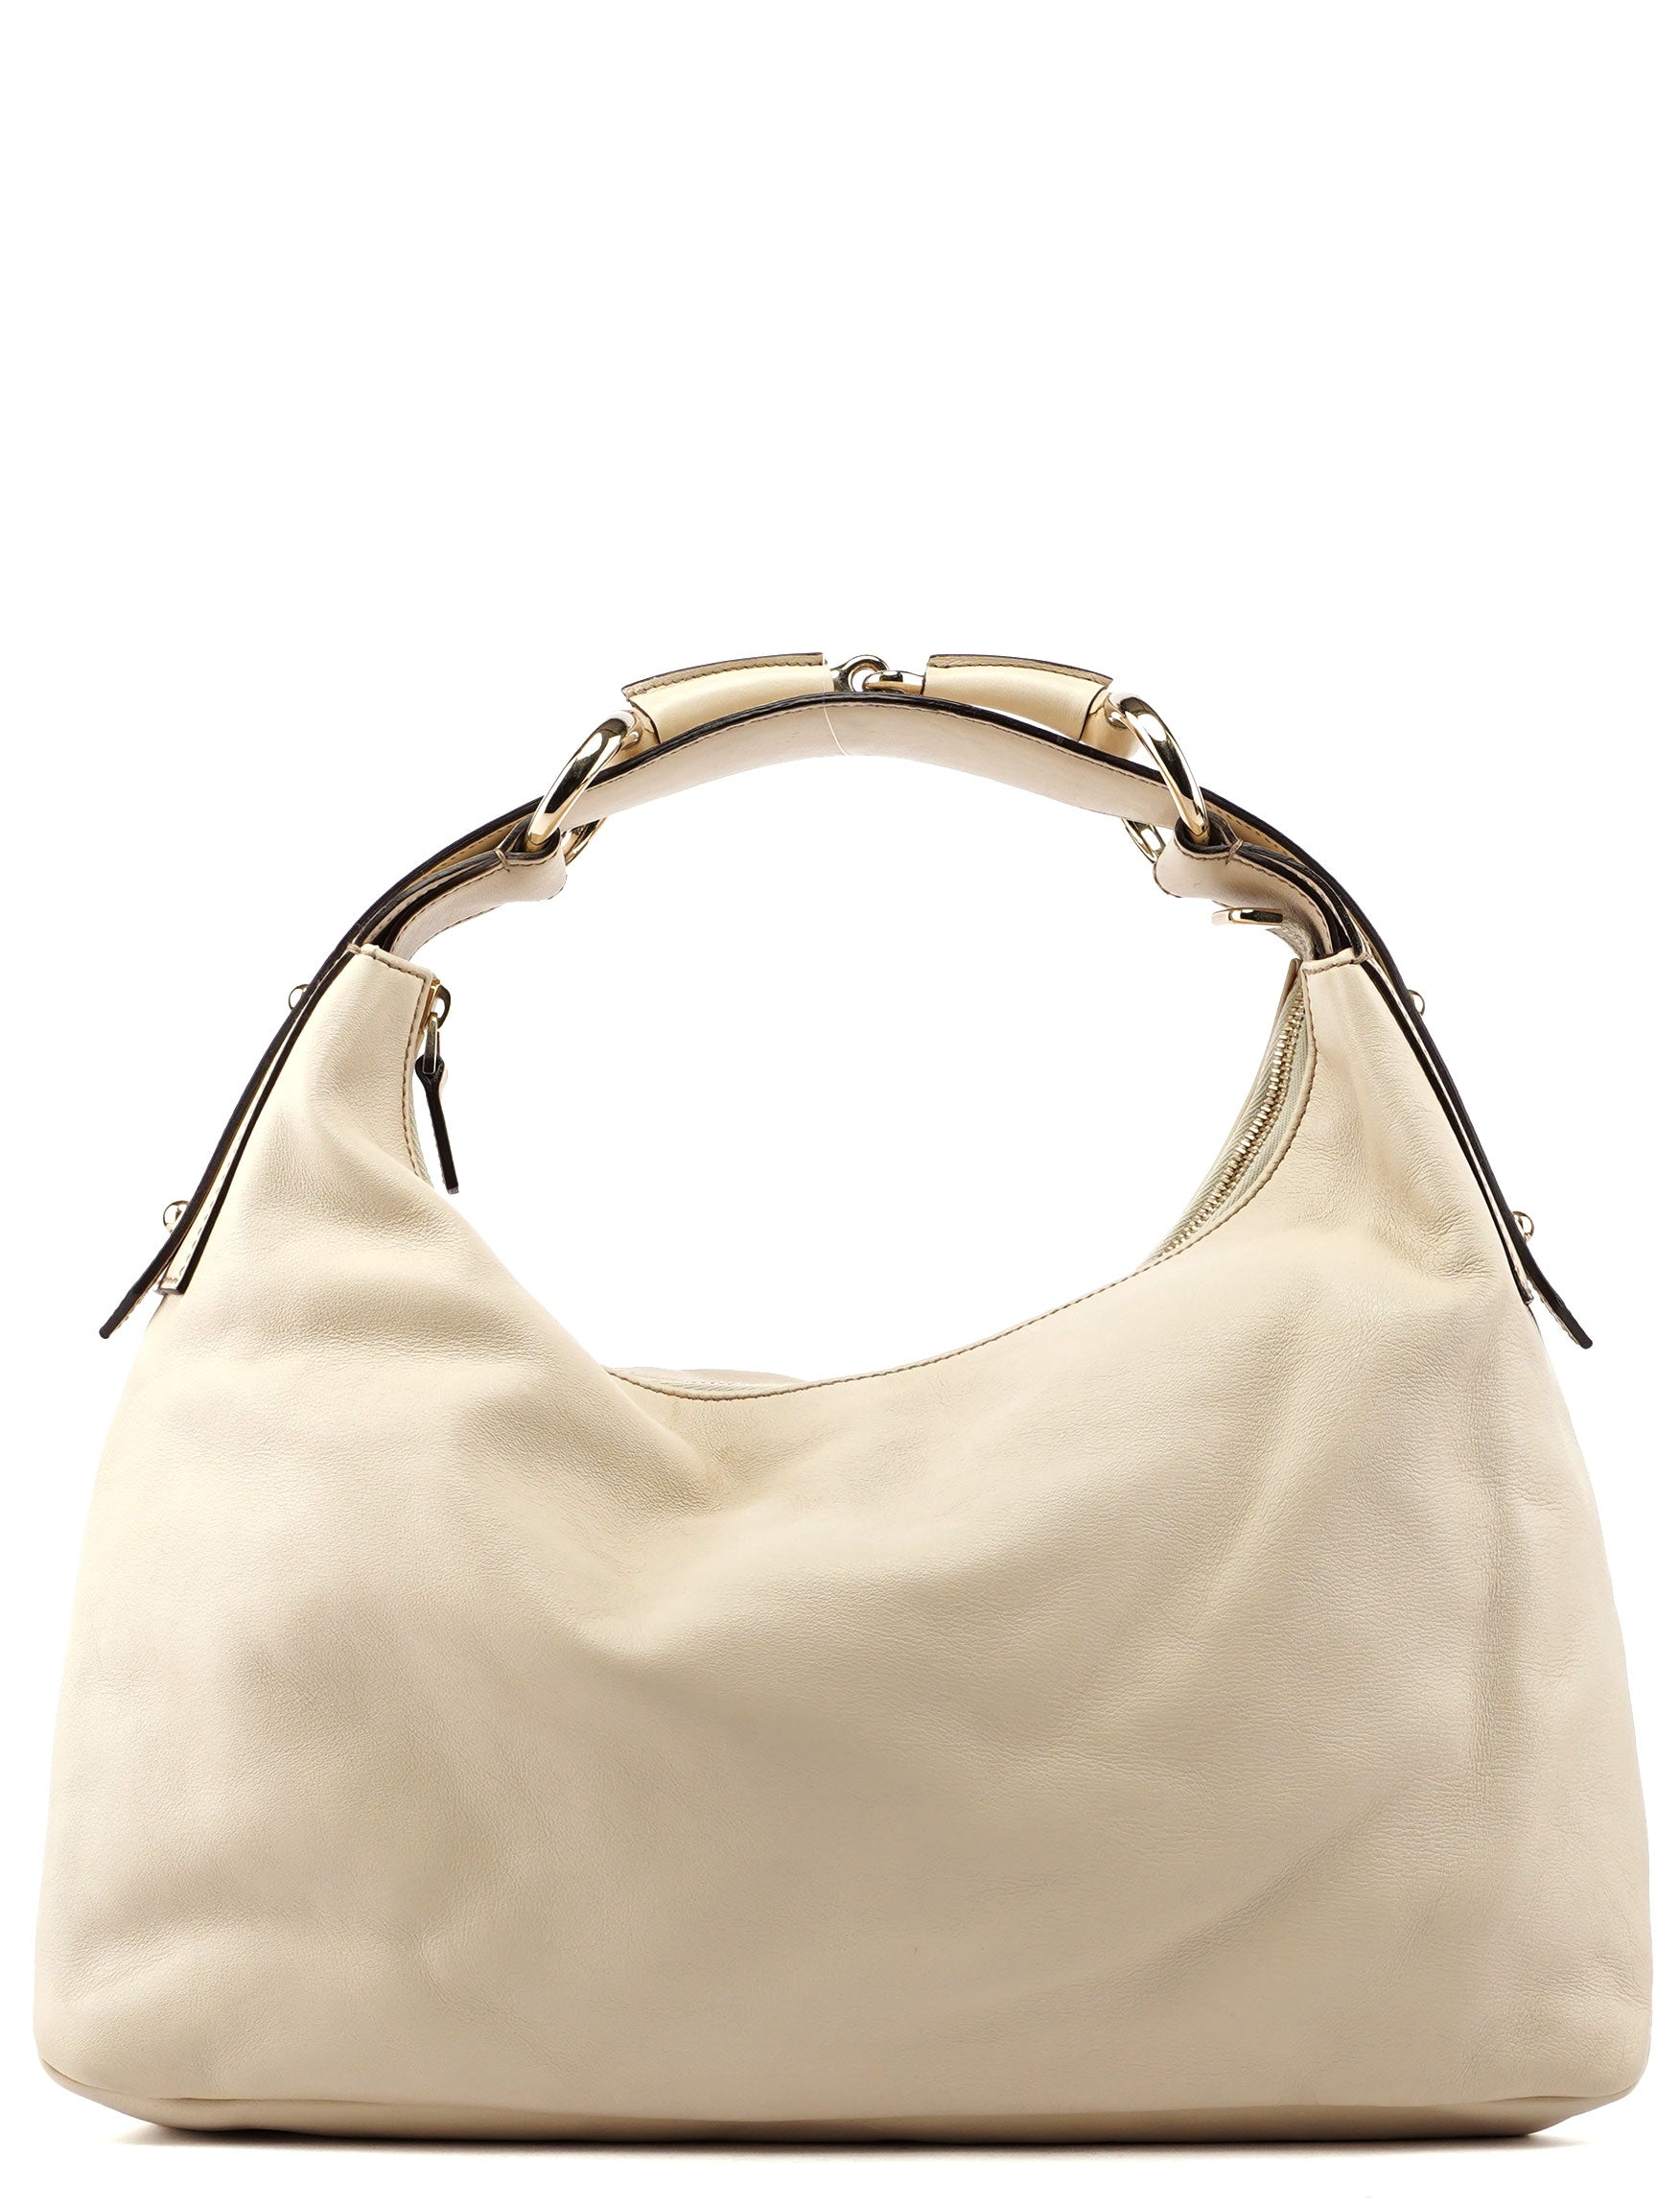 Gucci Gucci Off-White Leather Horsebit Shoulder Bag